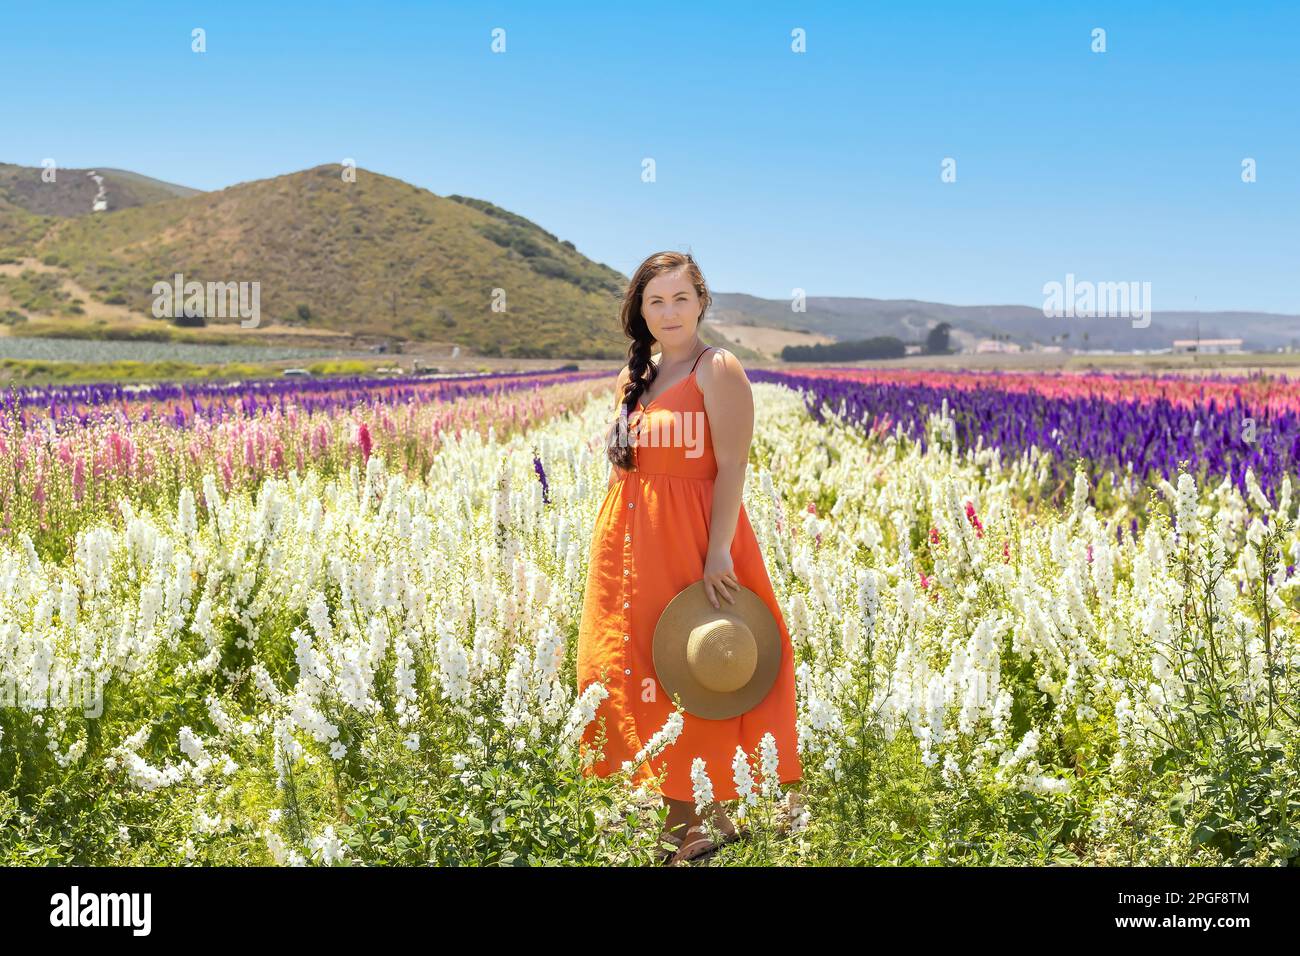 Woman in orange dress looking at camera, stood in flower field Stock Photo